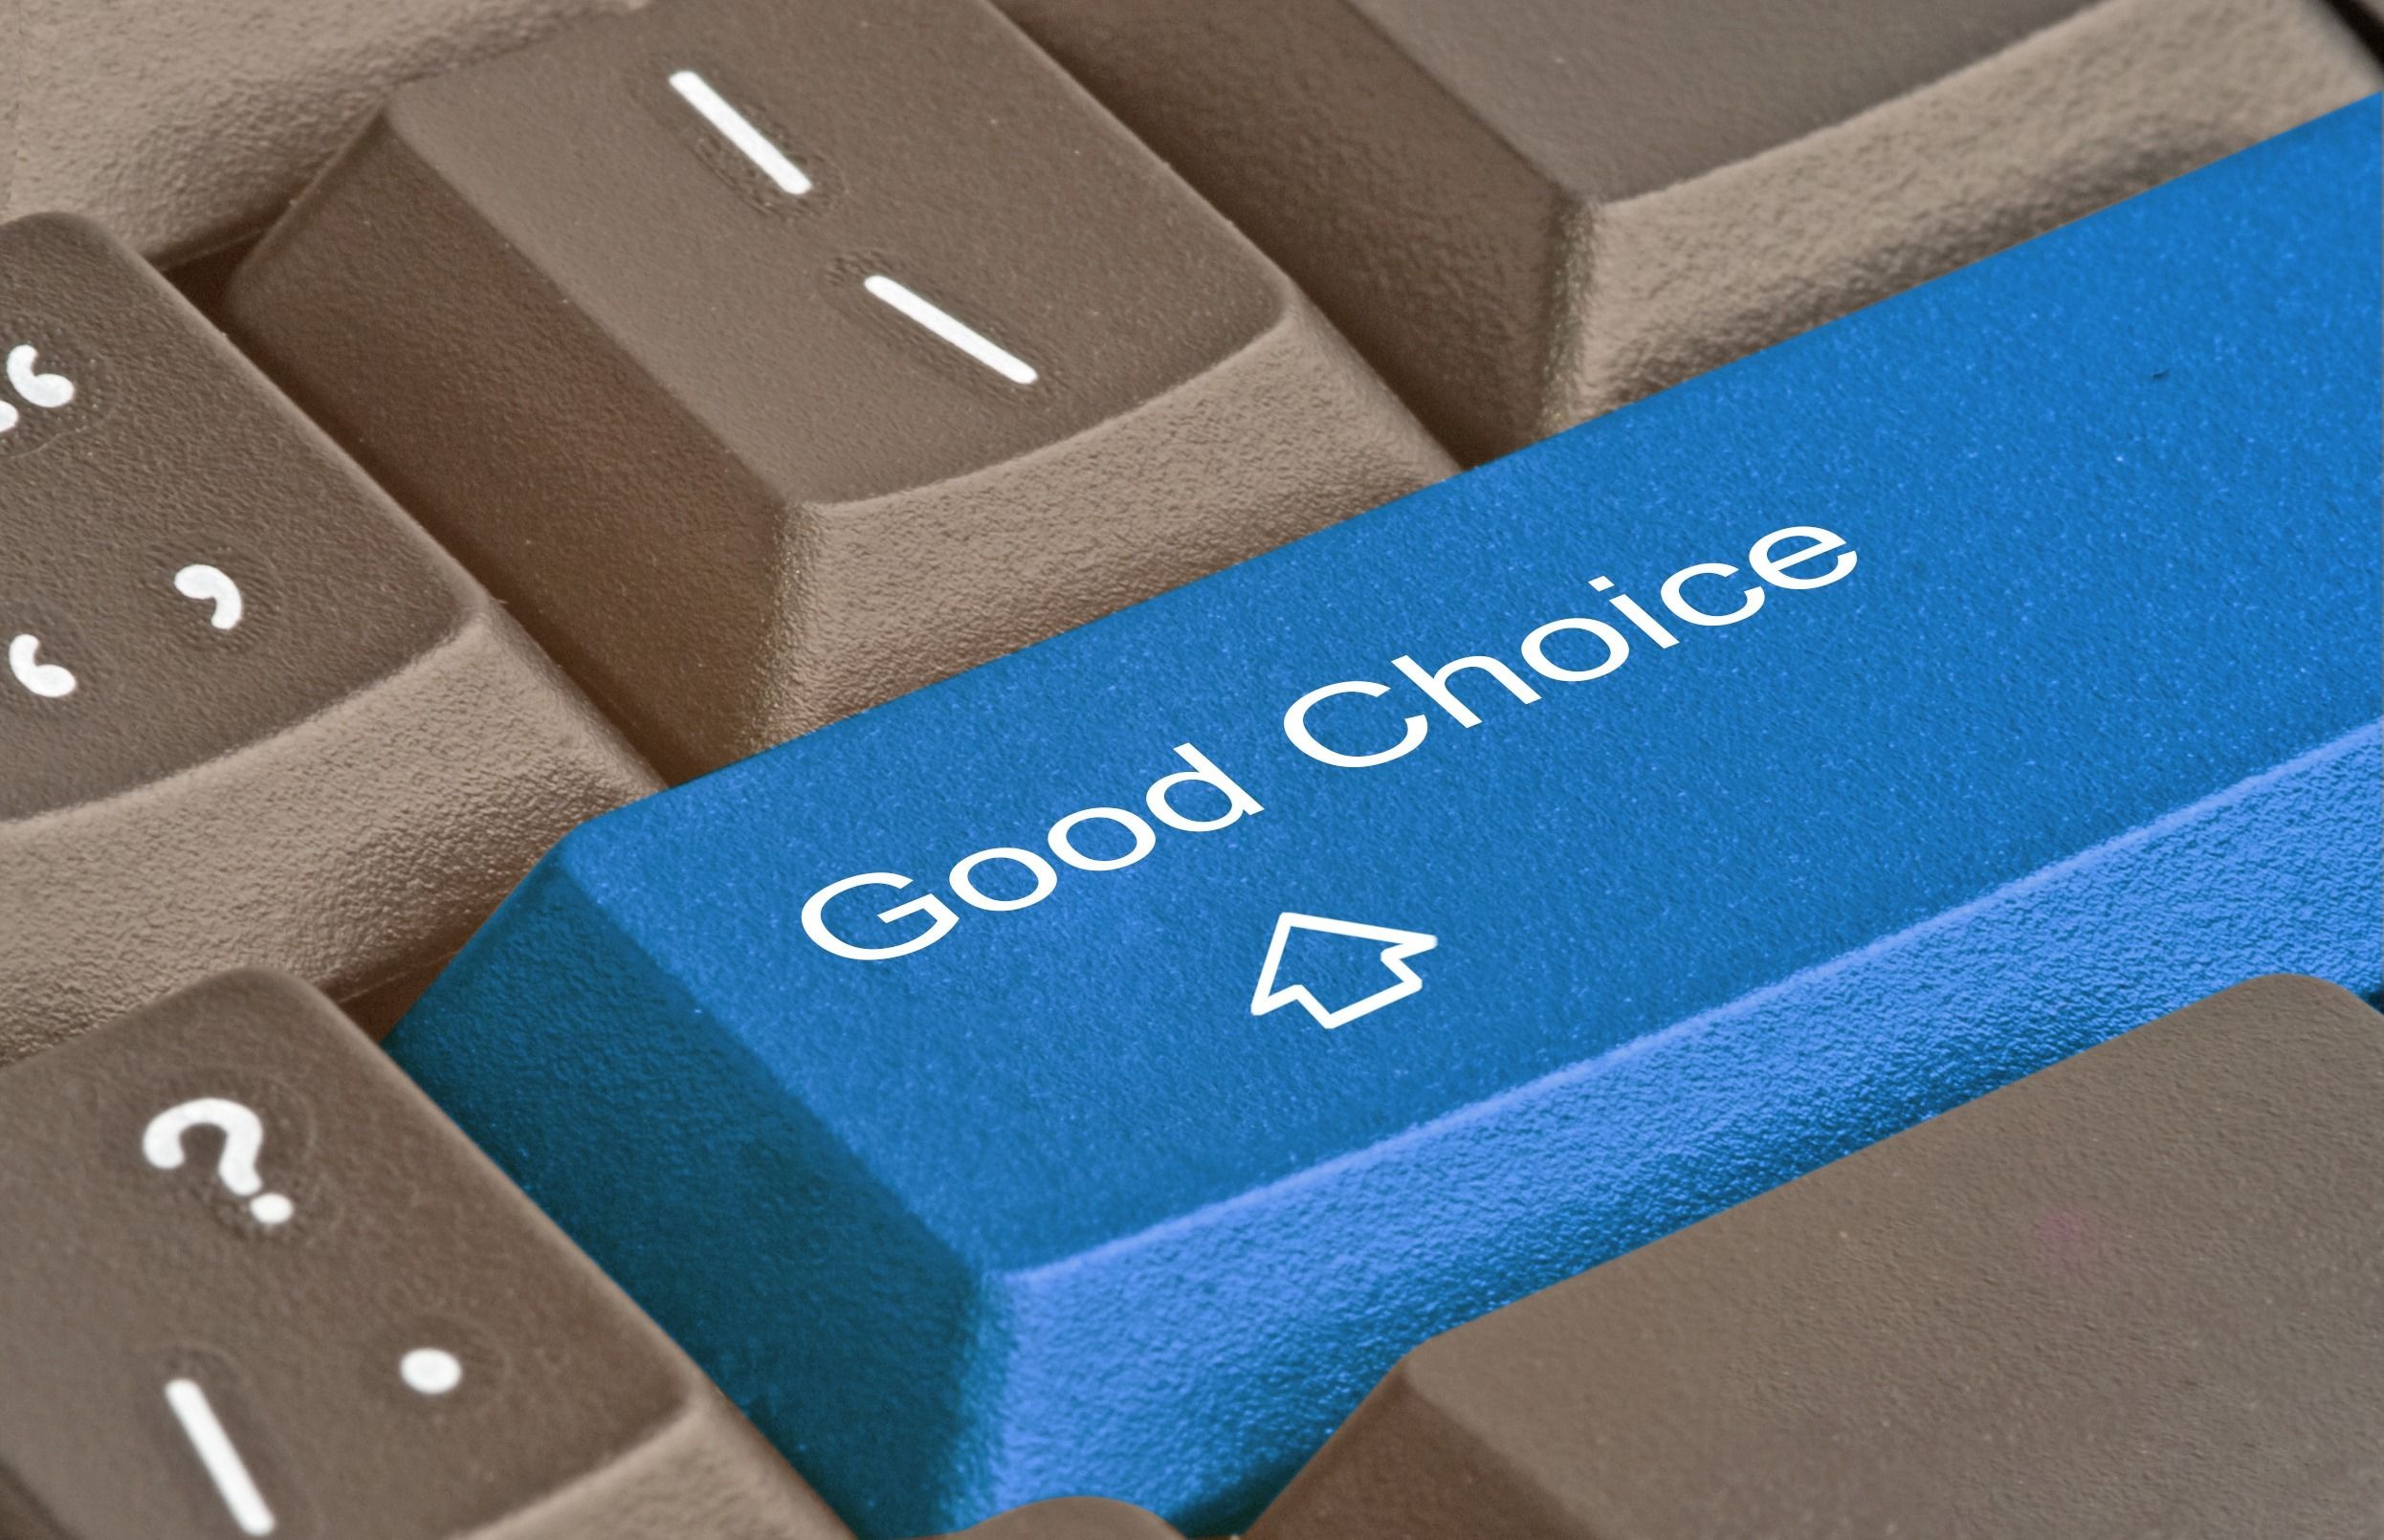 Making a choice a good choice isn't just luck.